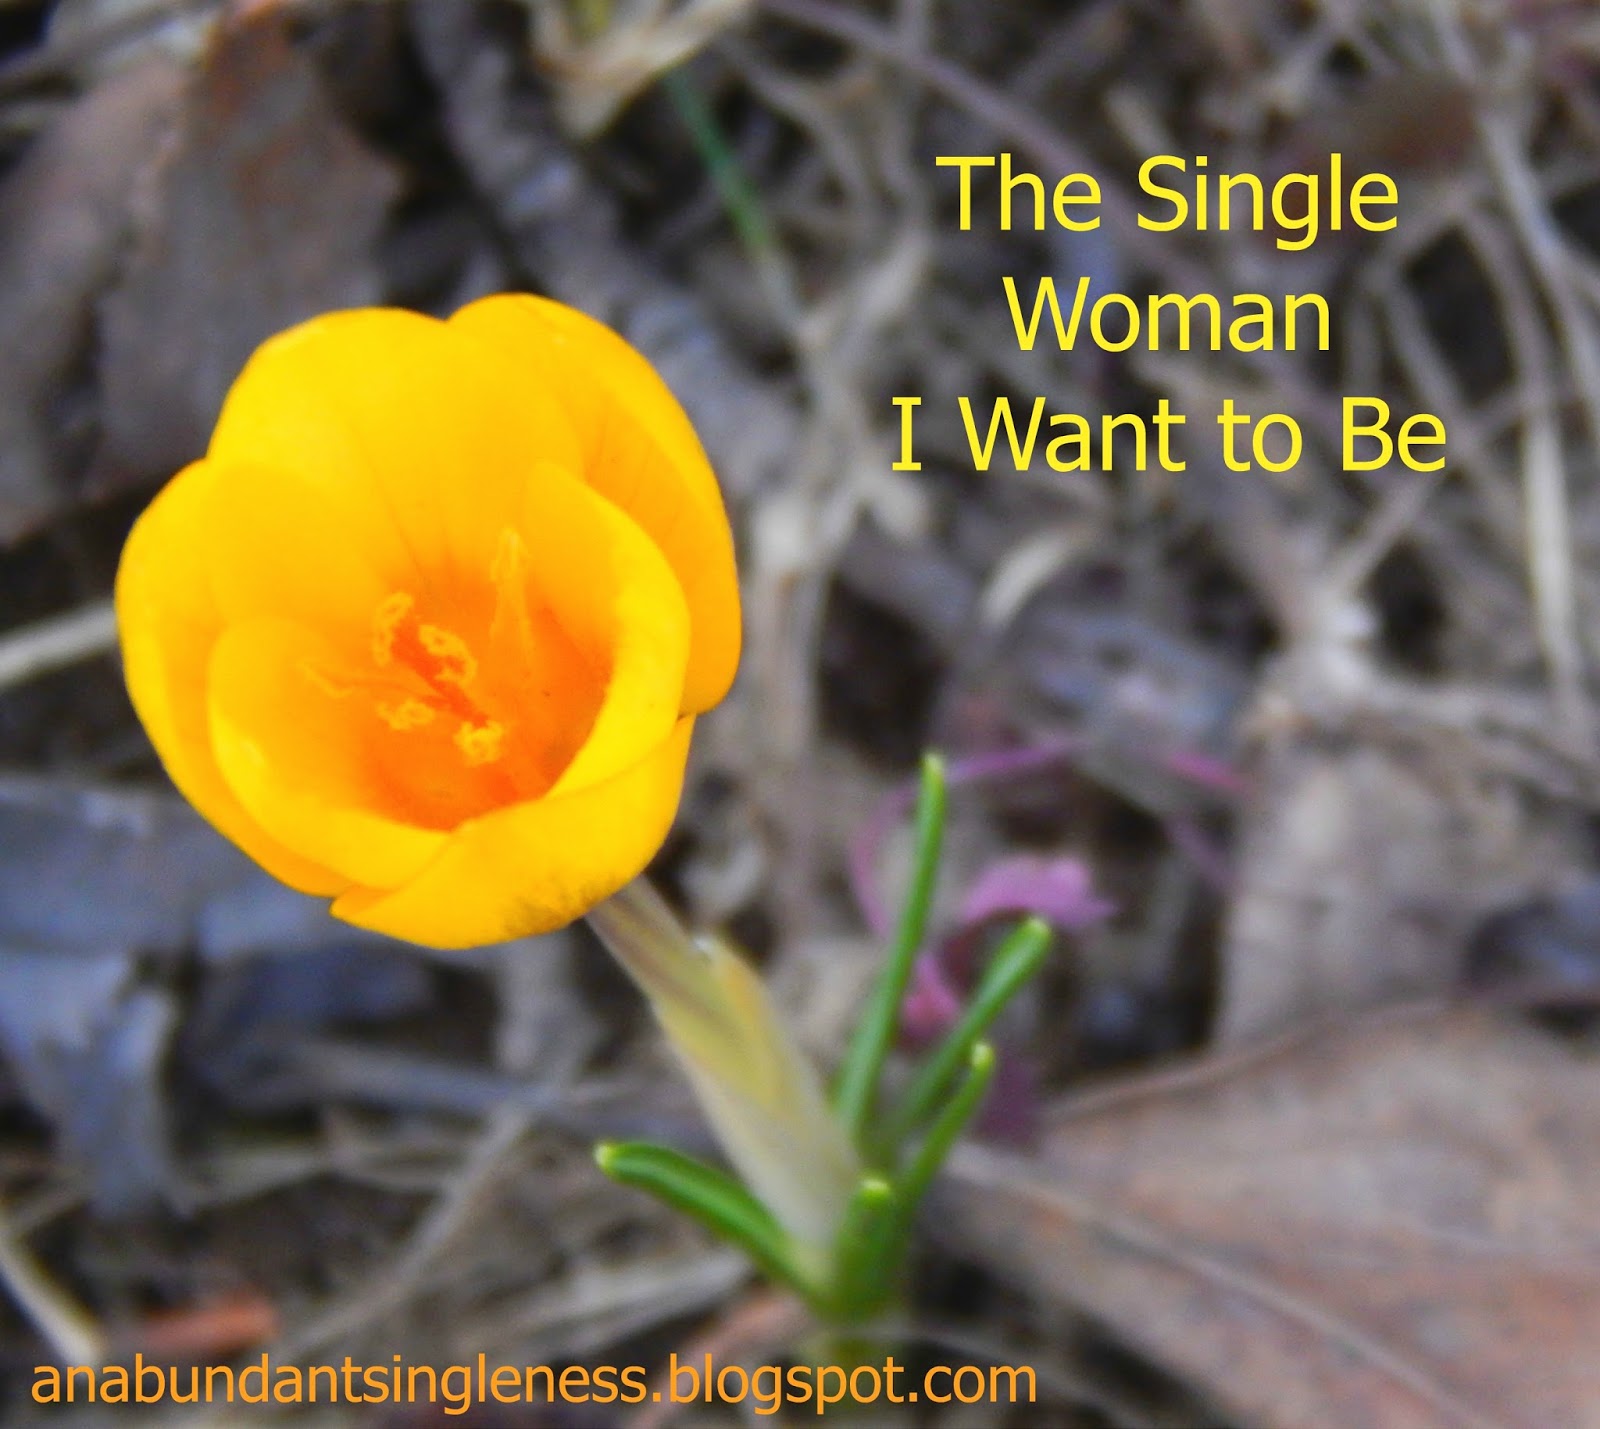 An Abundant Singleness: The Single Woman I Want to Be